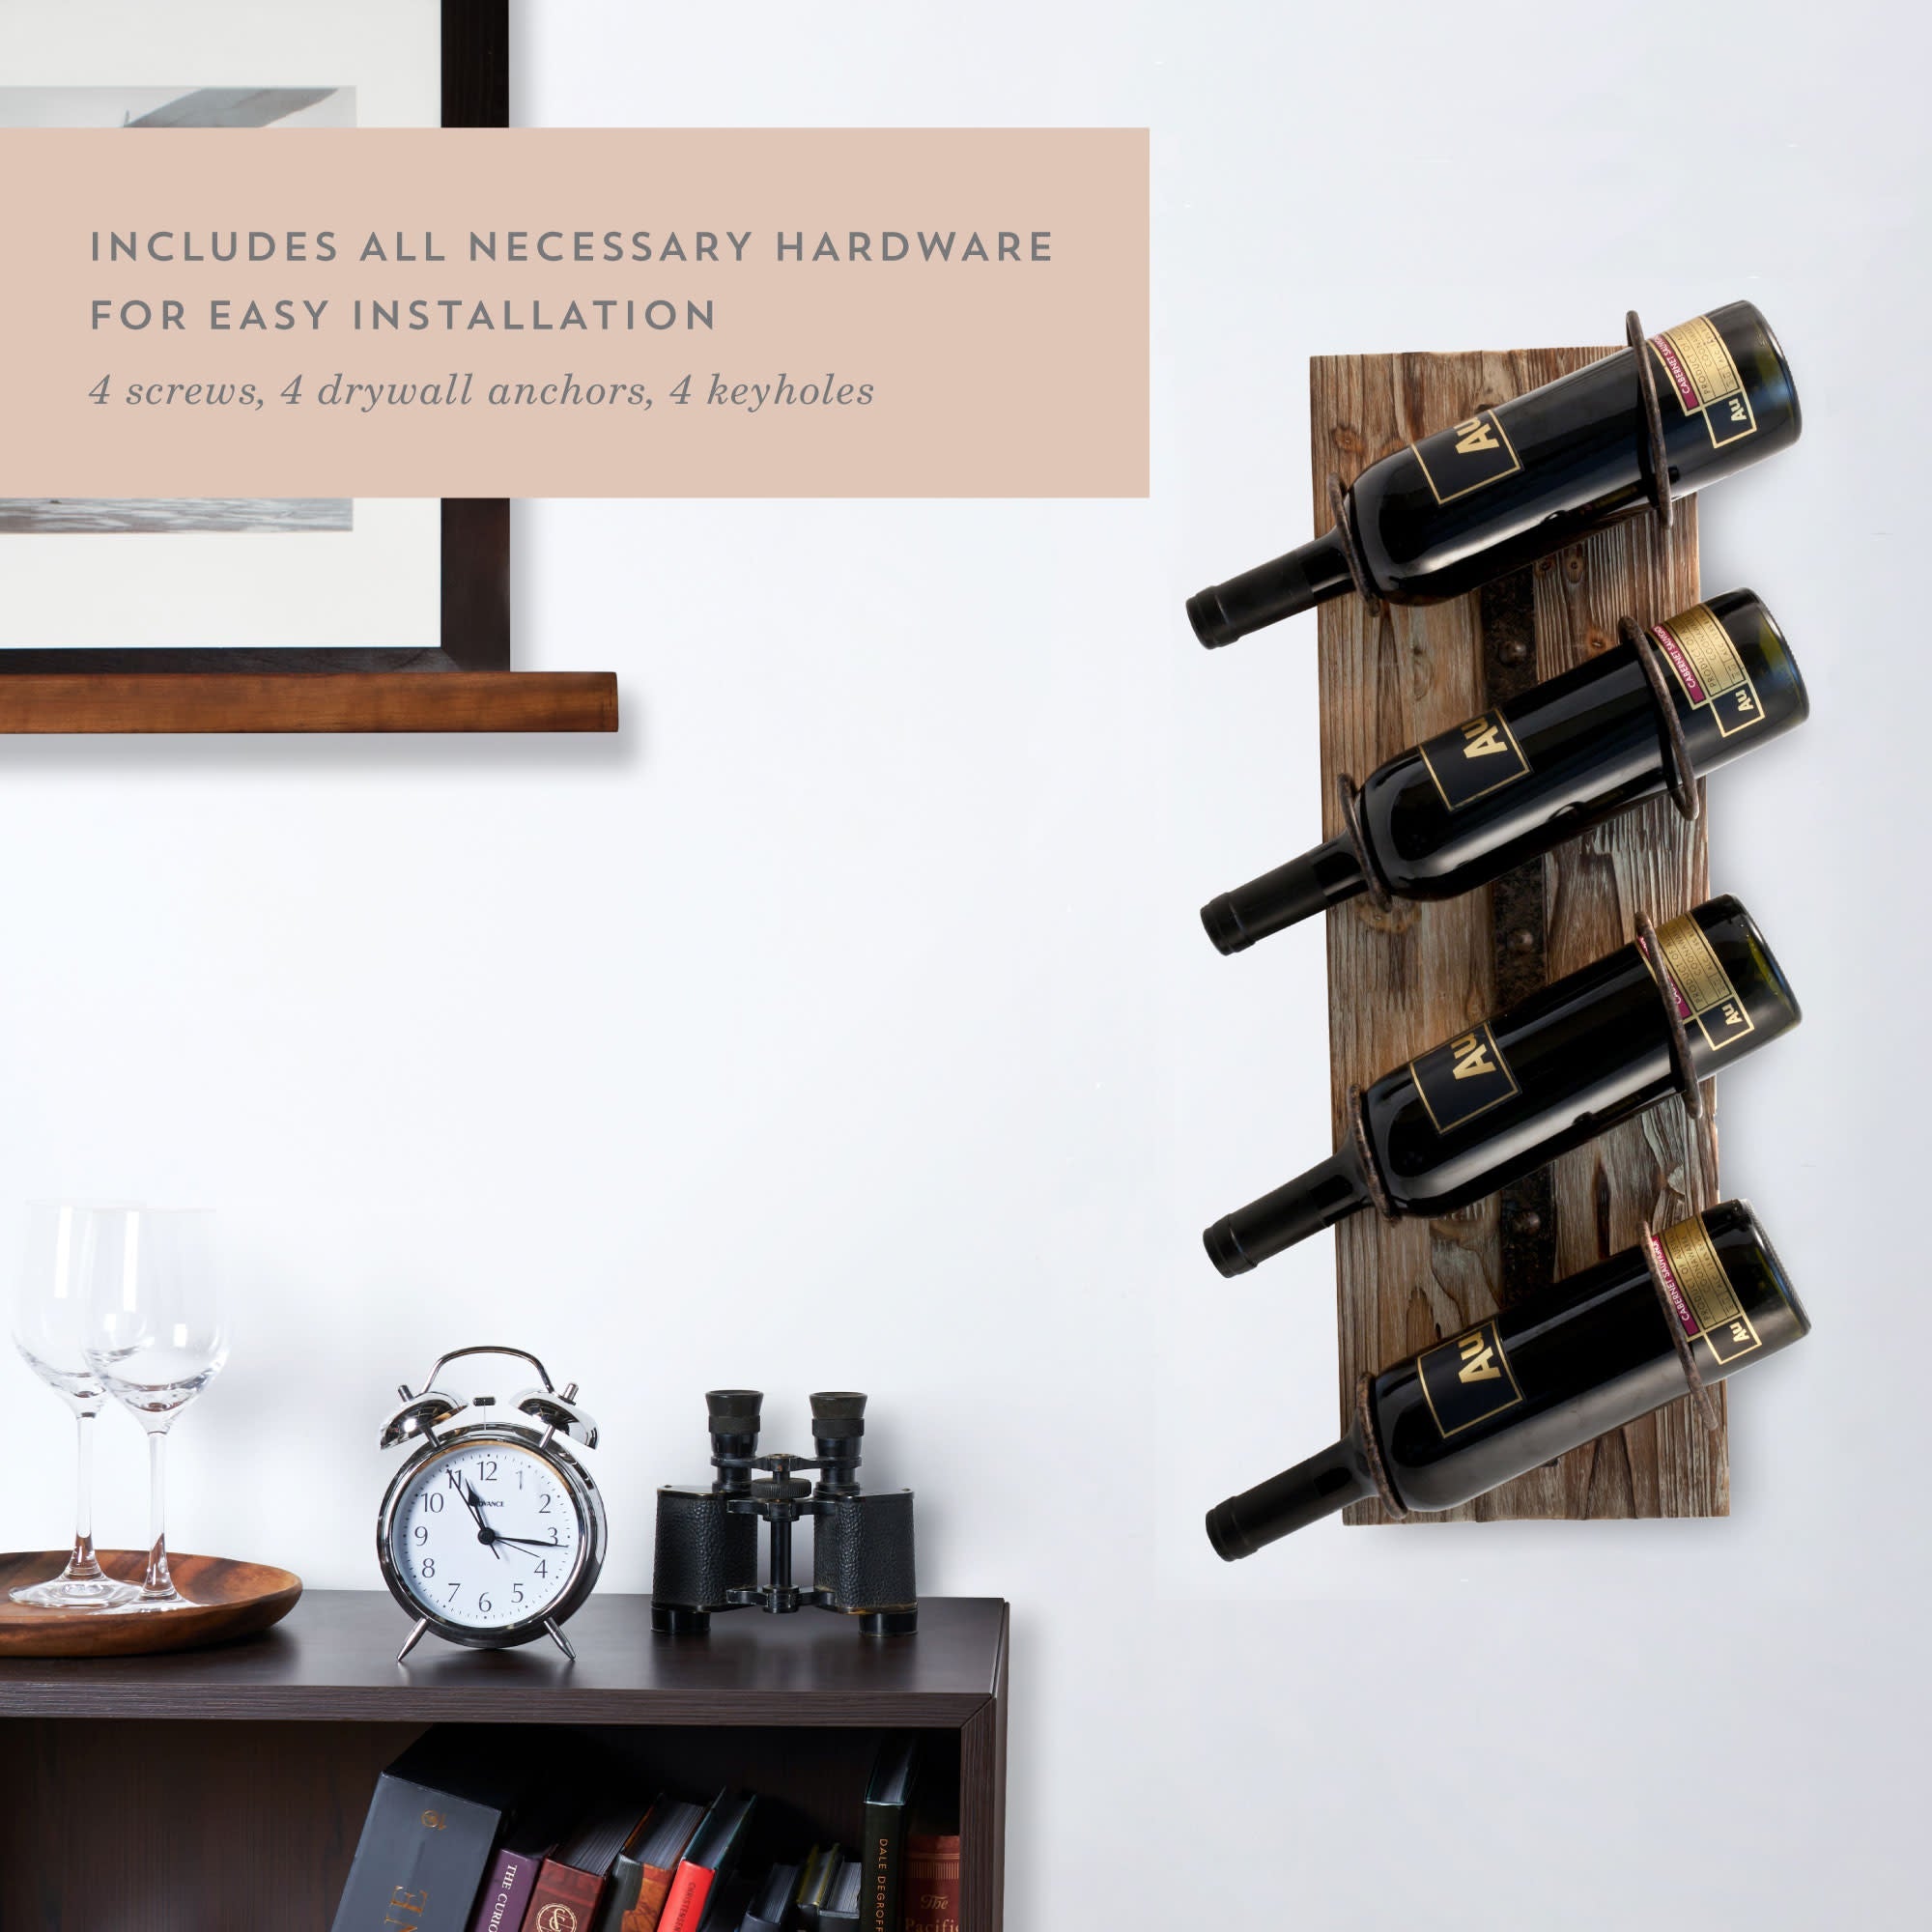 Metal and Wood Wine Rack by Twine® (2741) Wine Accessories Twine